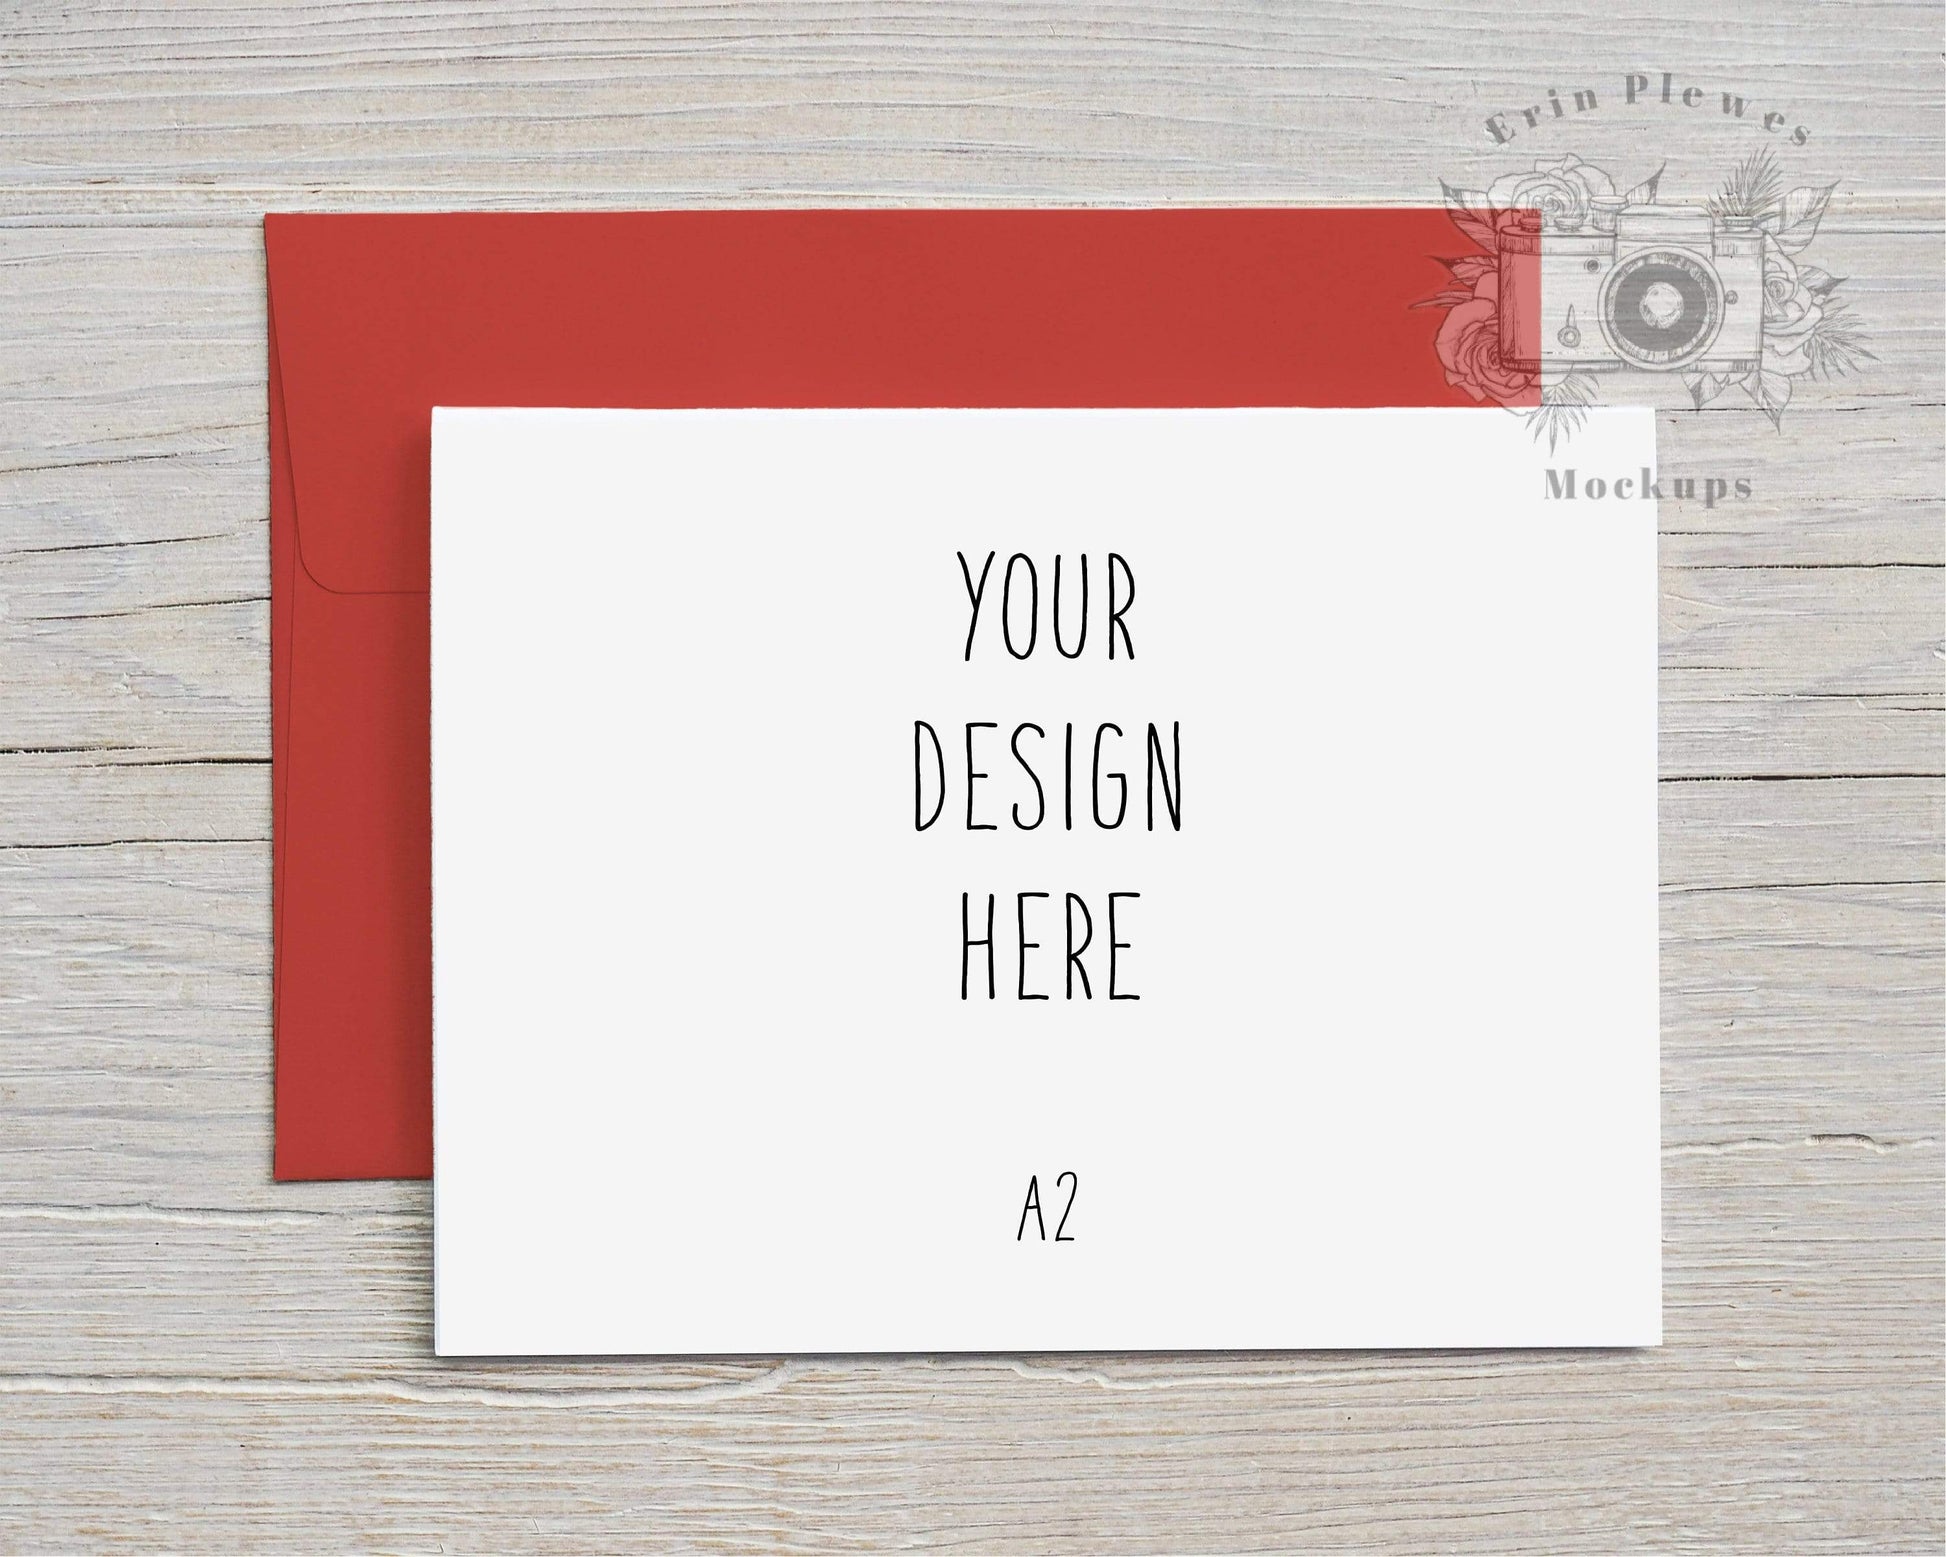 Erin Plewes Mockups A2 Card Mockup Red Envelope, Greeting Card Mock-up Landscape, Christmas Card Lifestyle Photo Template, Jpeg Instant Digital Download